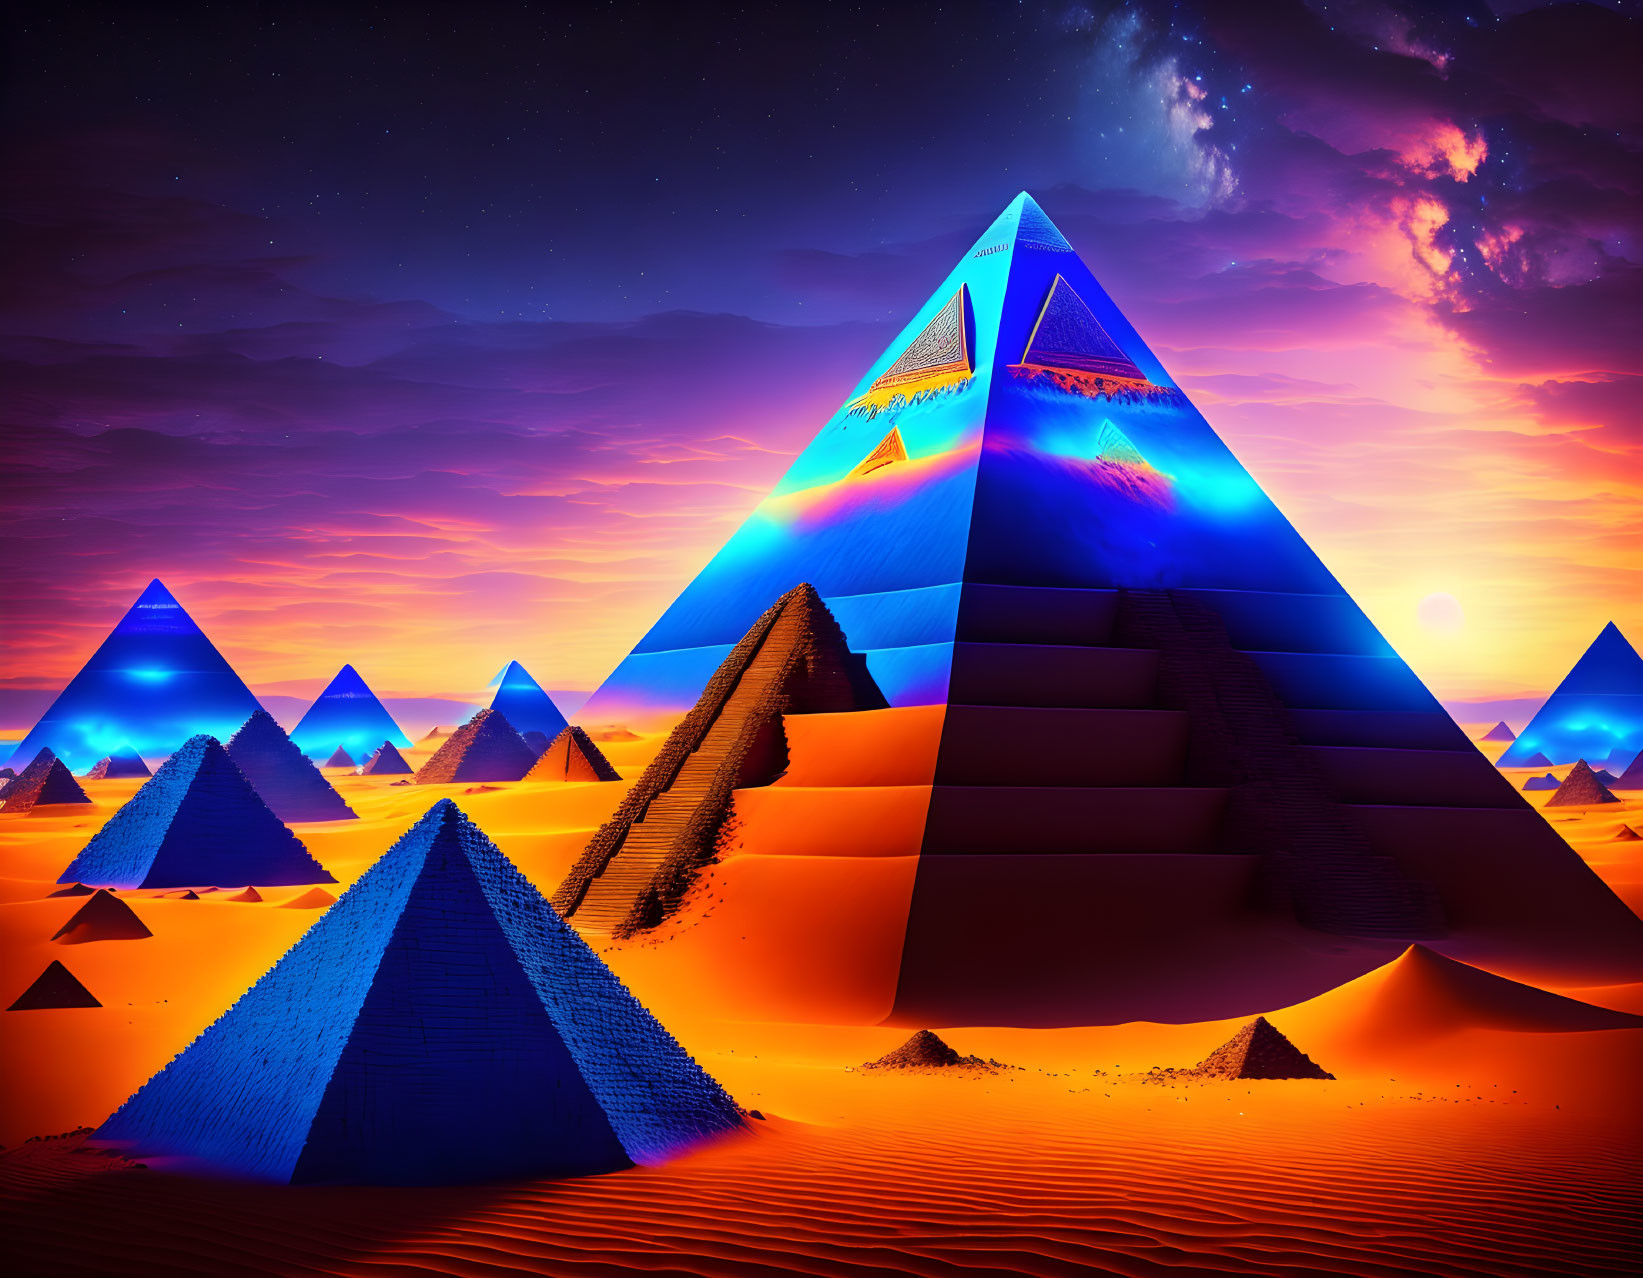 Blue and Purple Illuminated Pyramids in Desert Sunset Sky